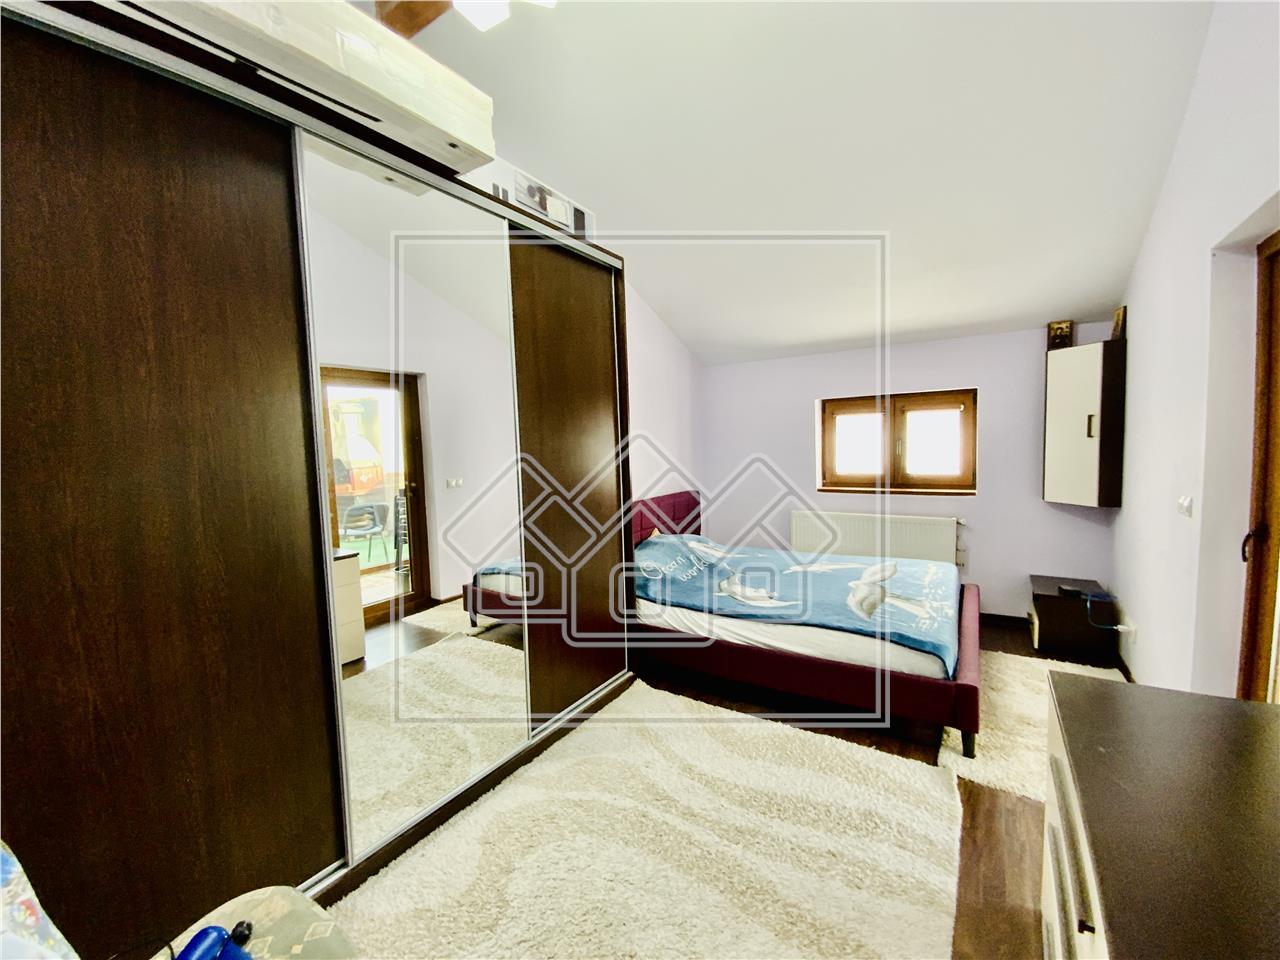 Apartament 3 rooms for sale in Sibiu - 14sqm terrace - Terezian area